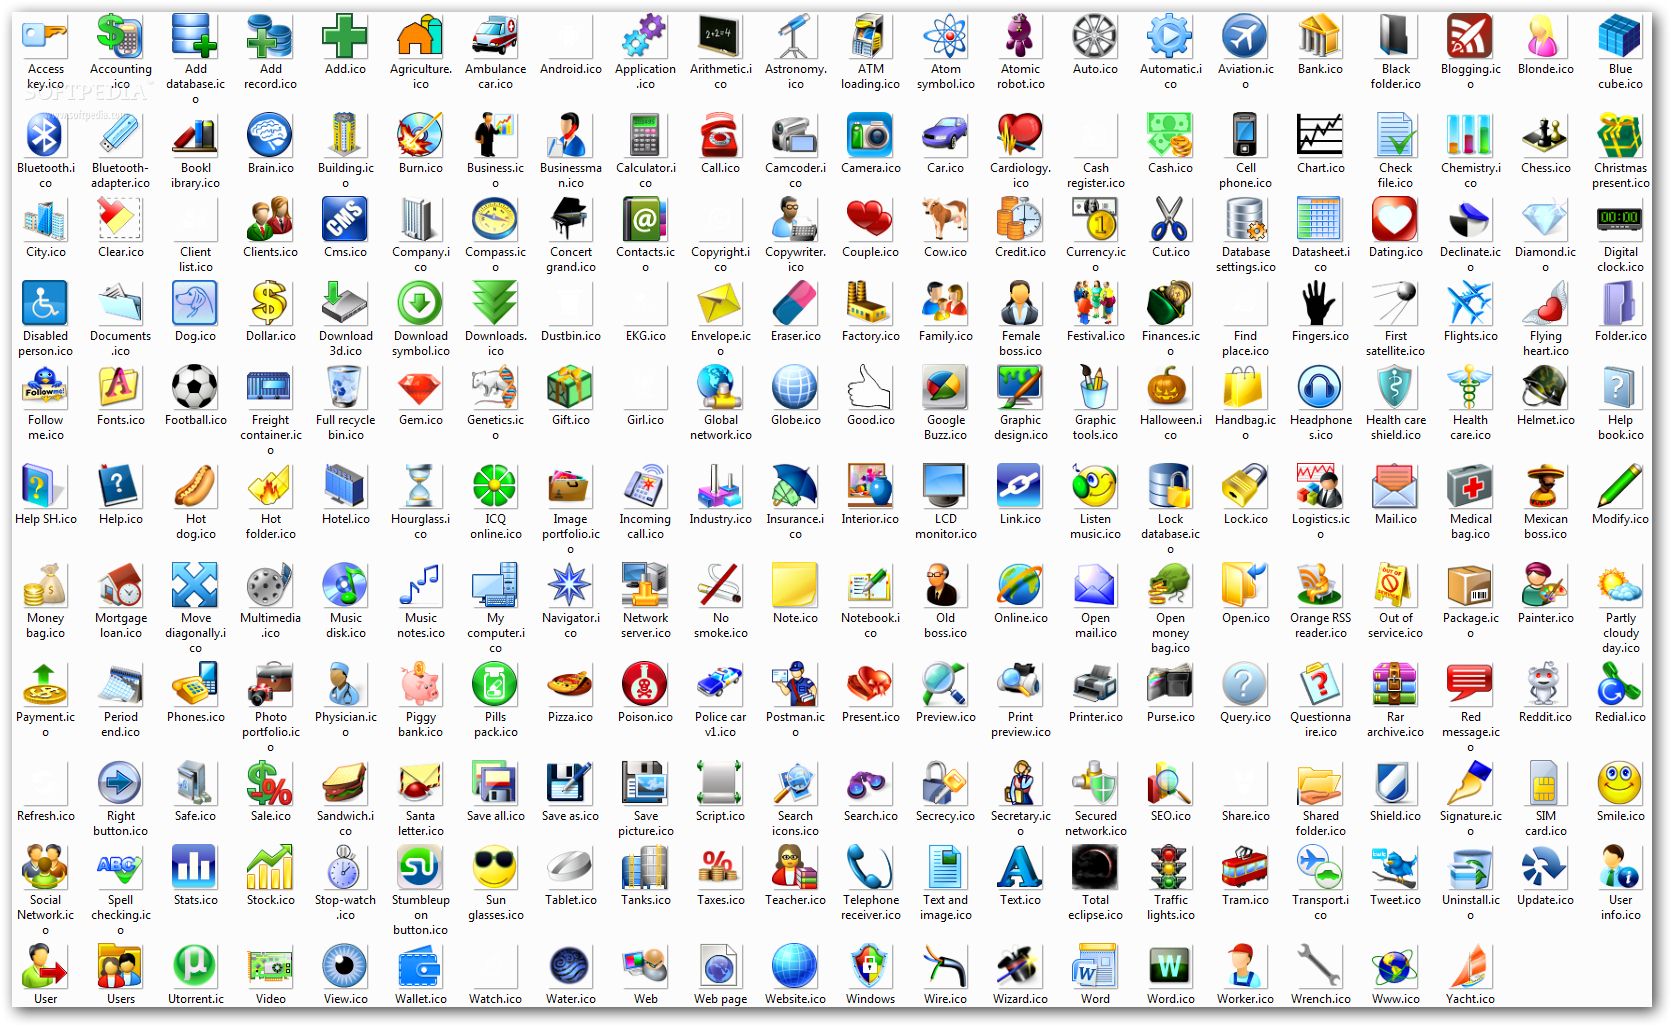 best windows 10 icon pack